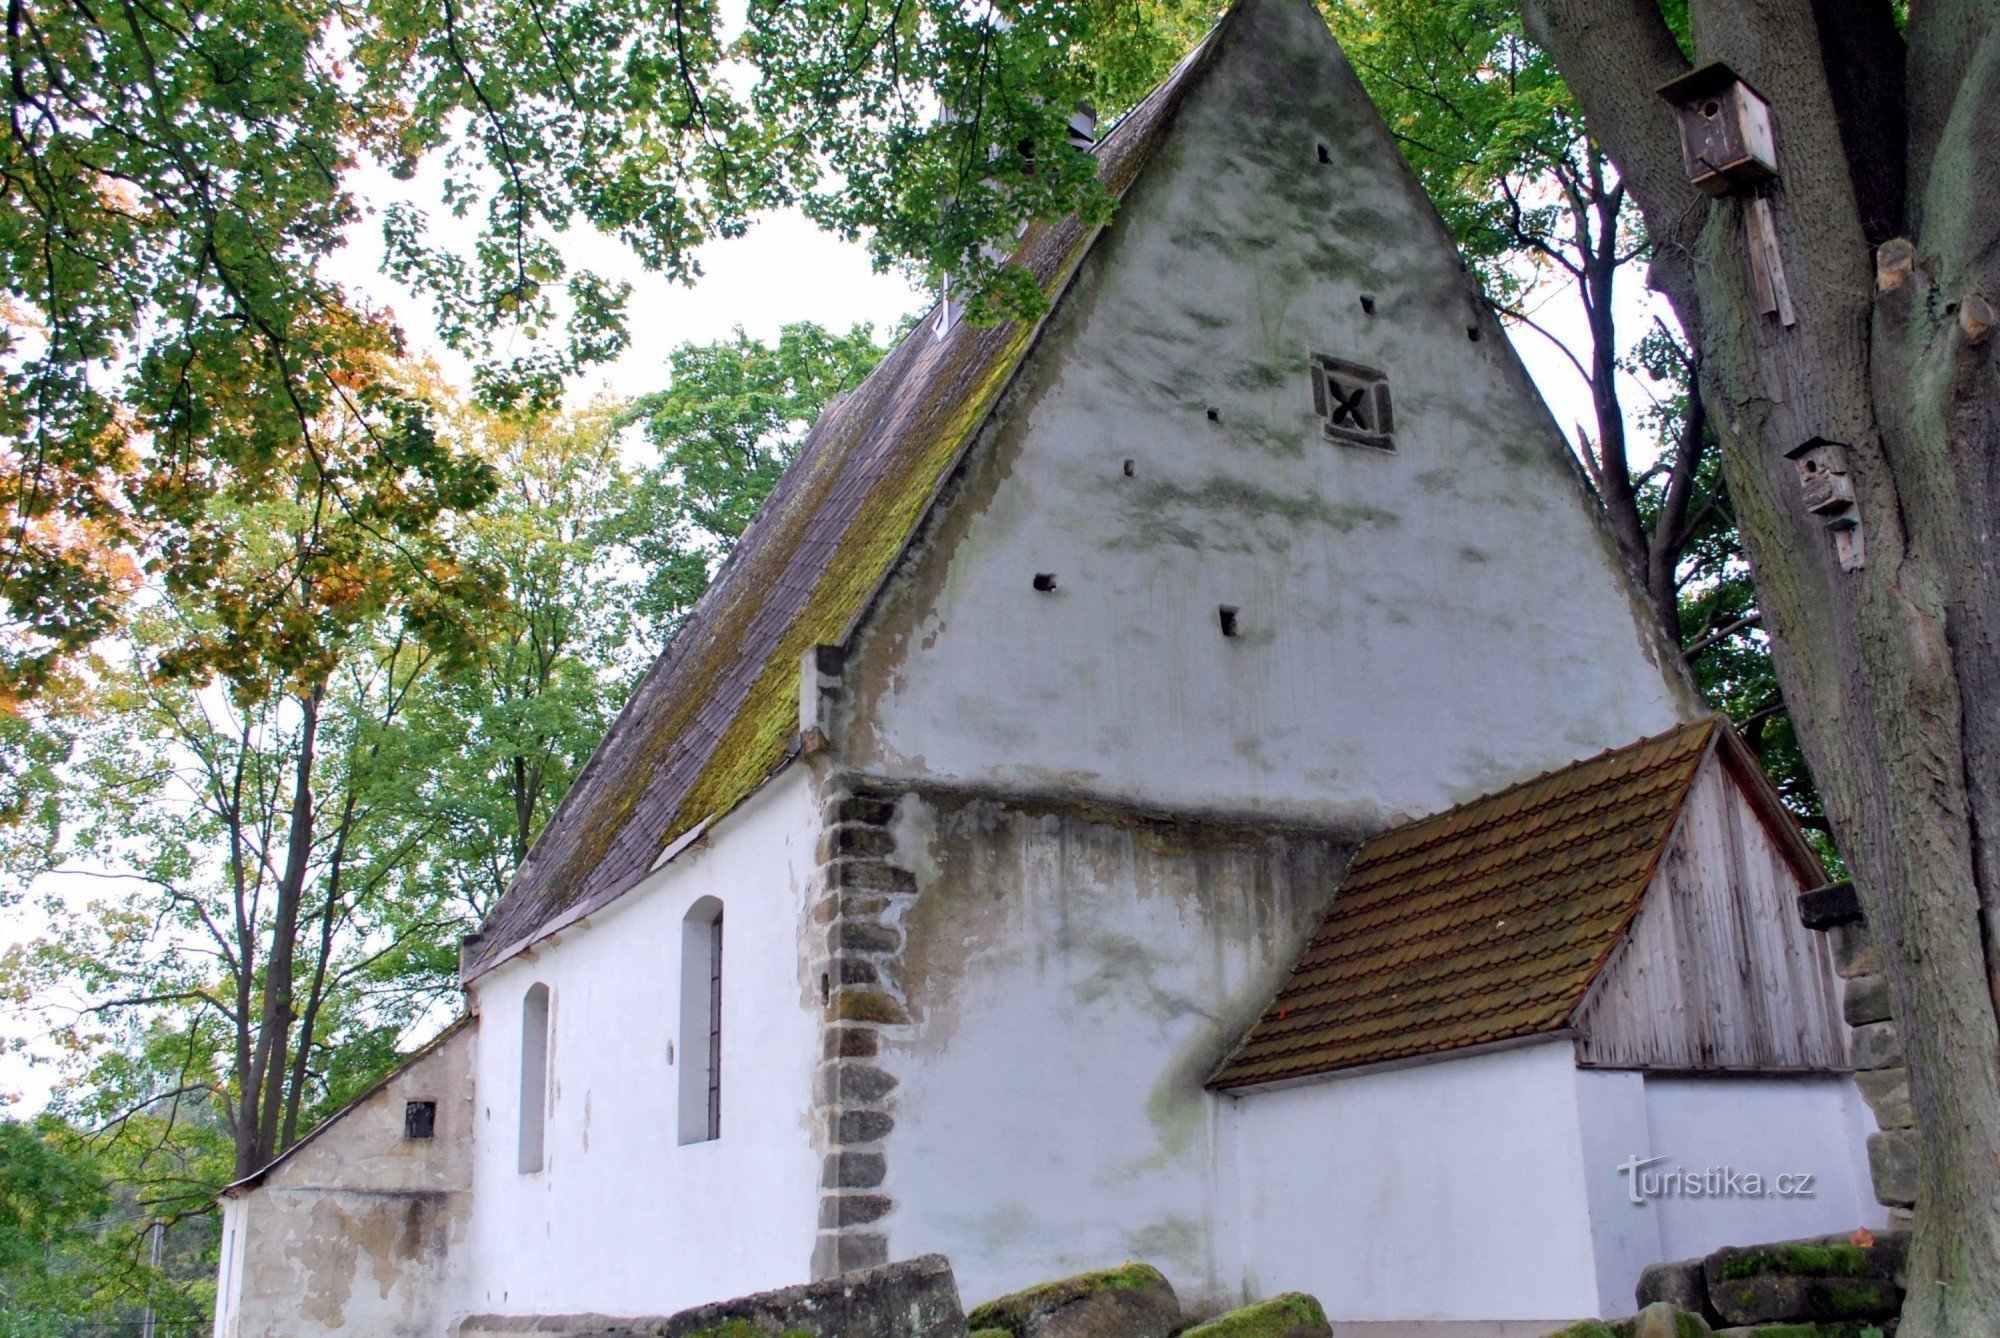 Hostíkovice - den äldsta sakrala byggnaden i Českolipsk